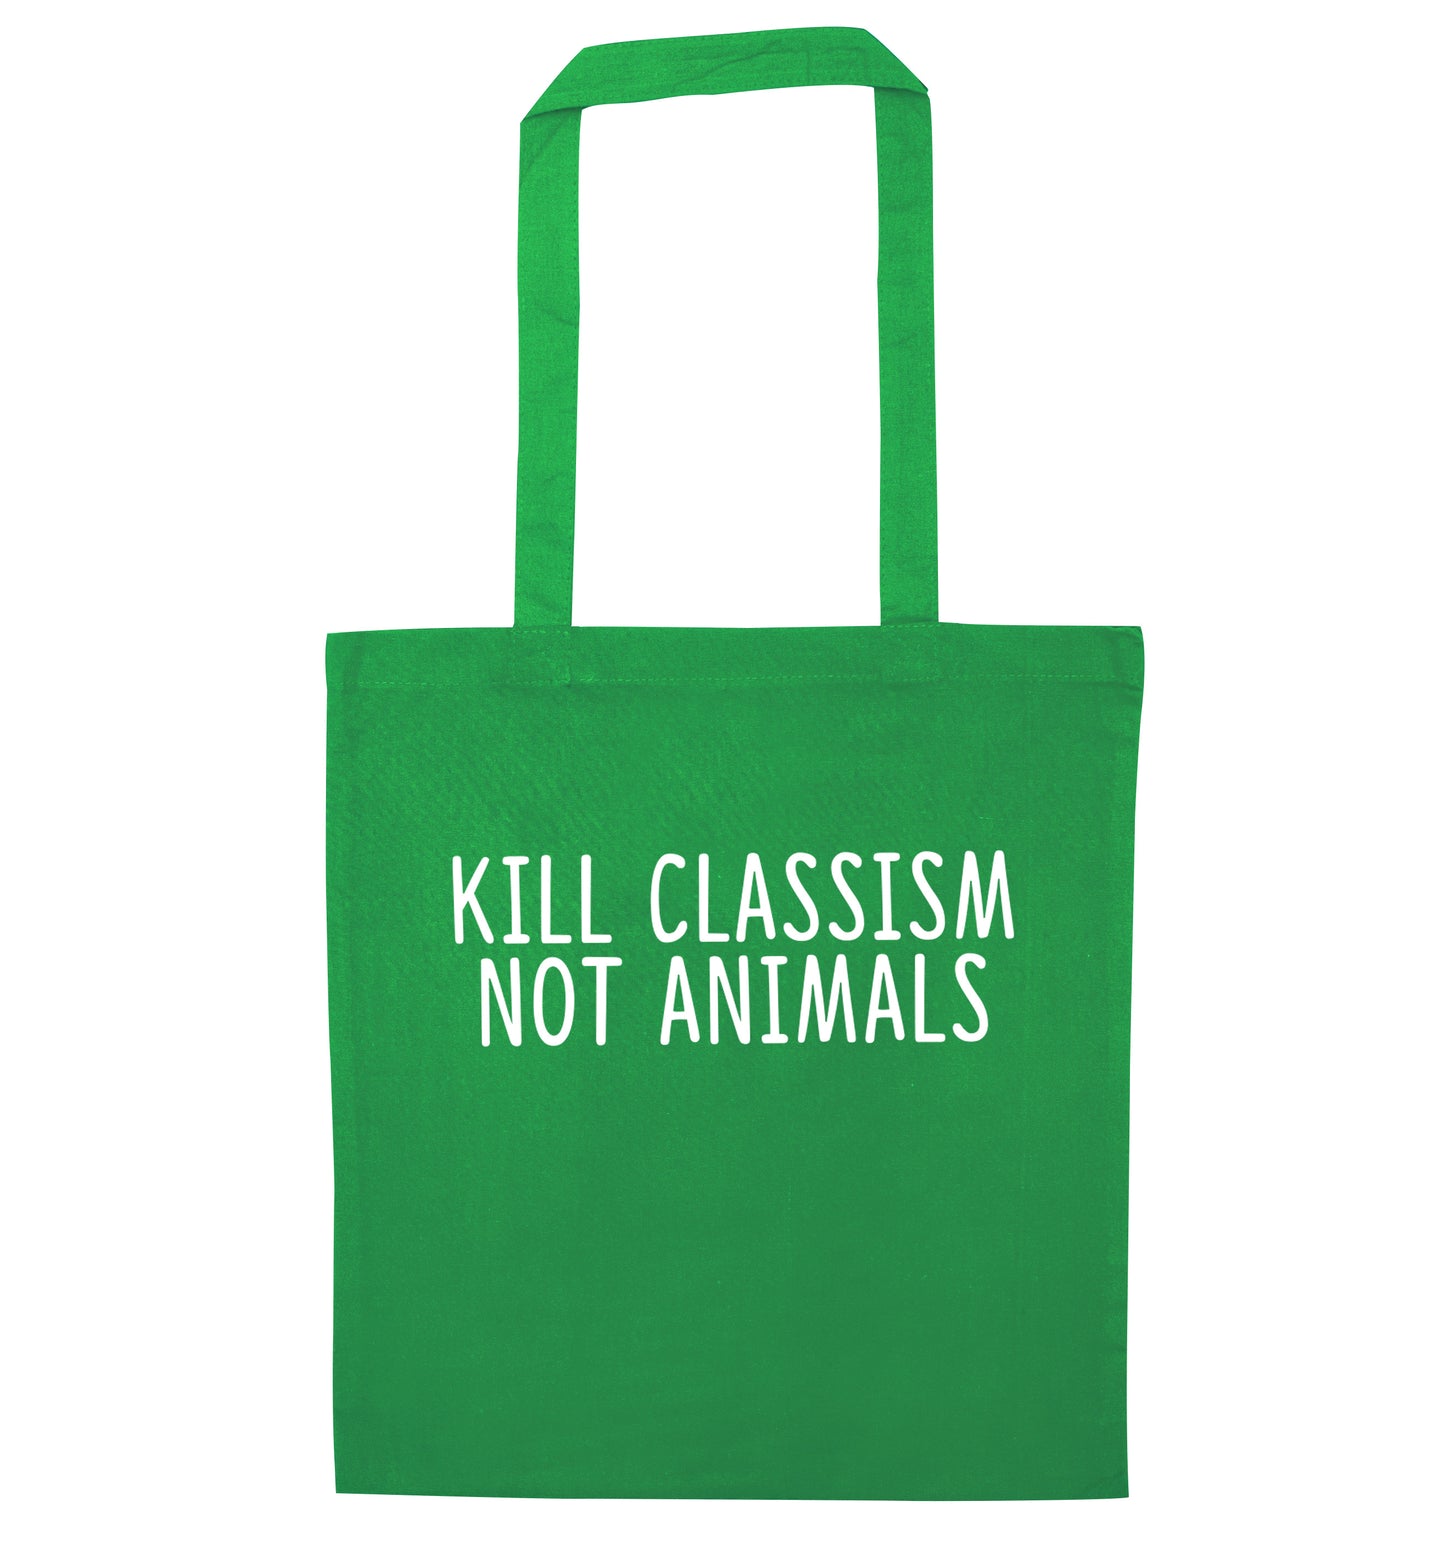 Kill Classism Not Animals green tote bag